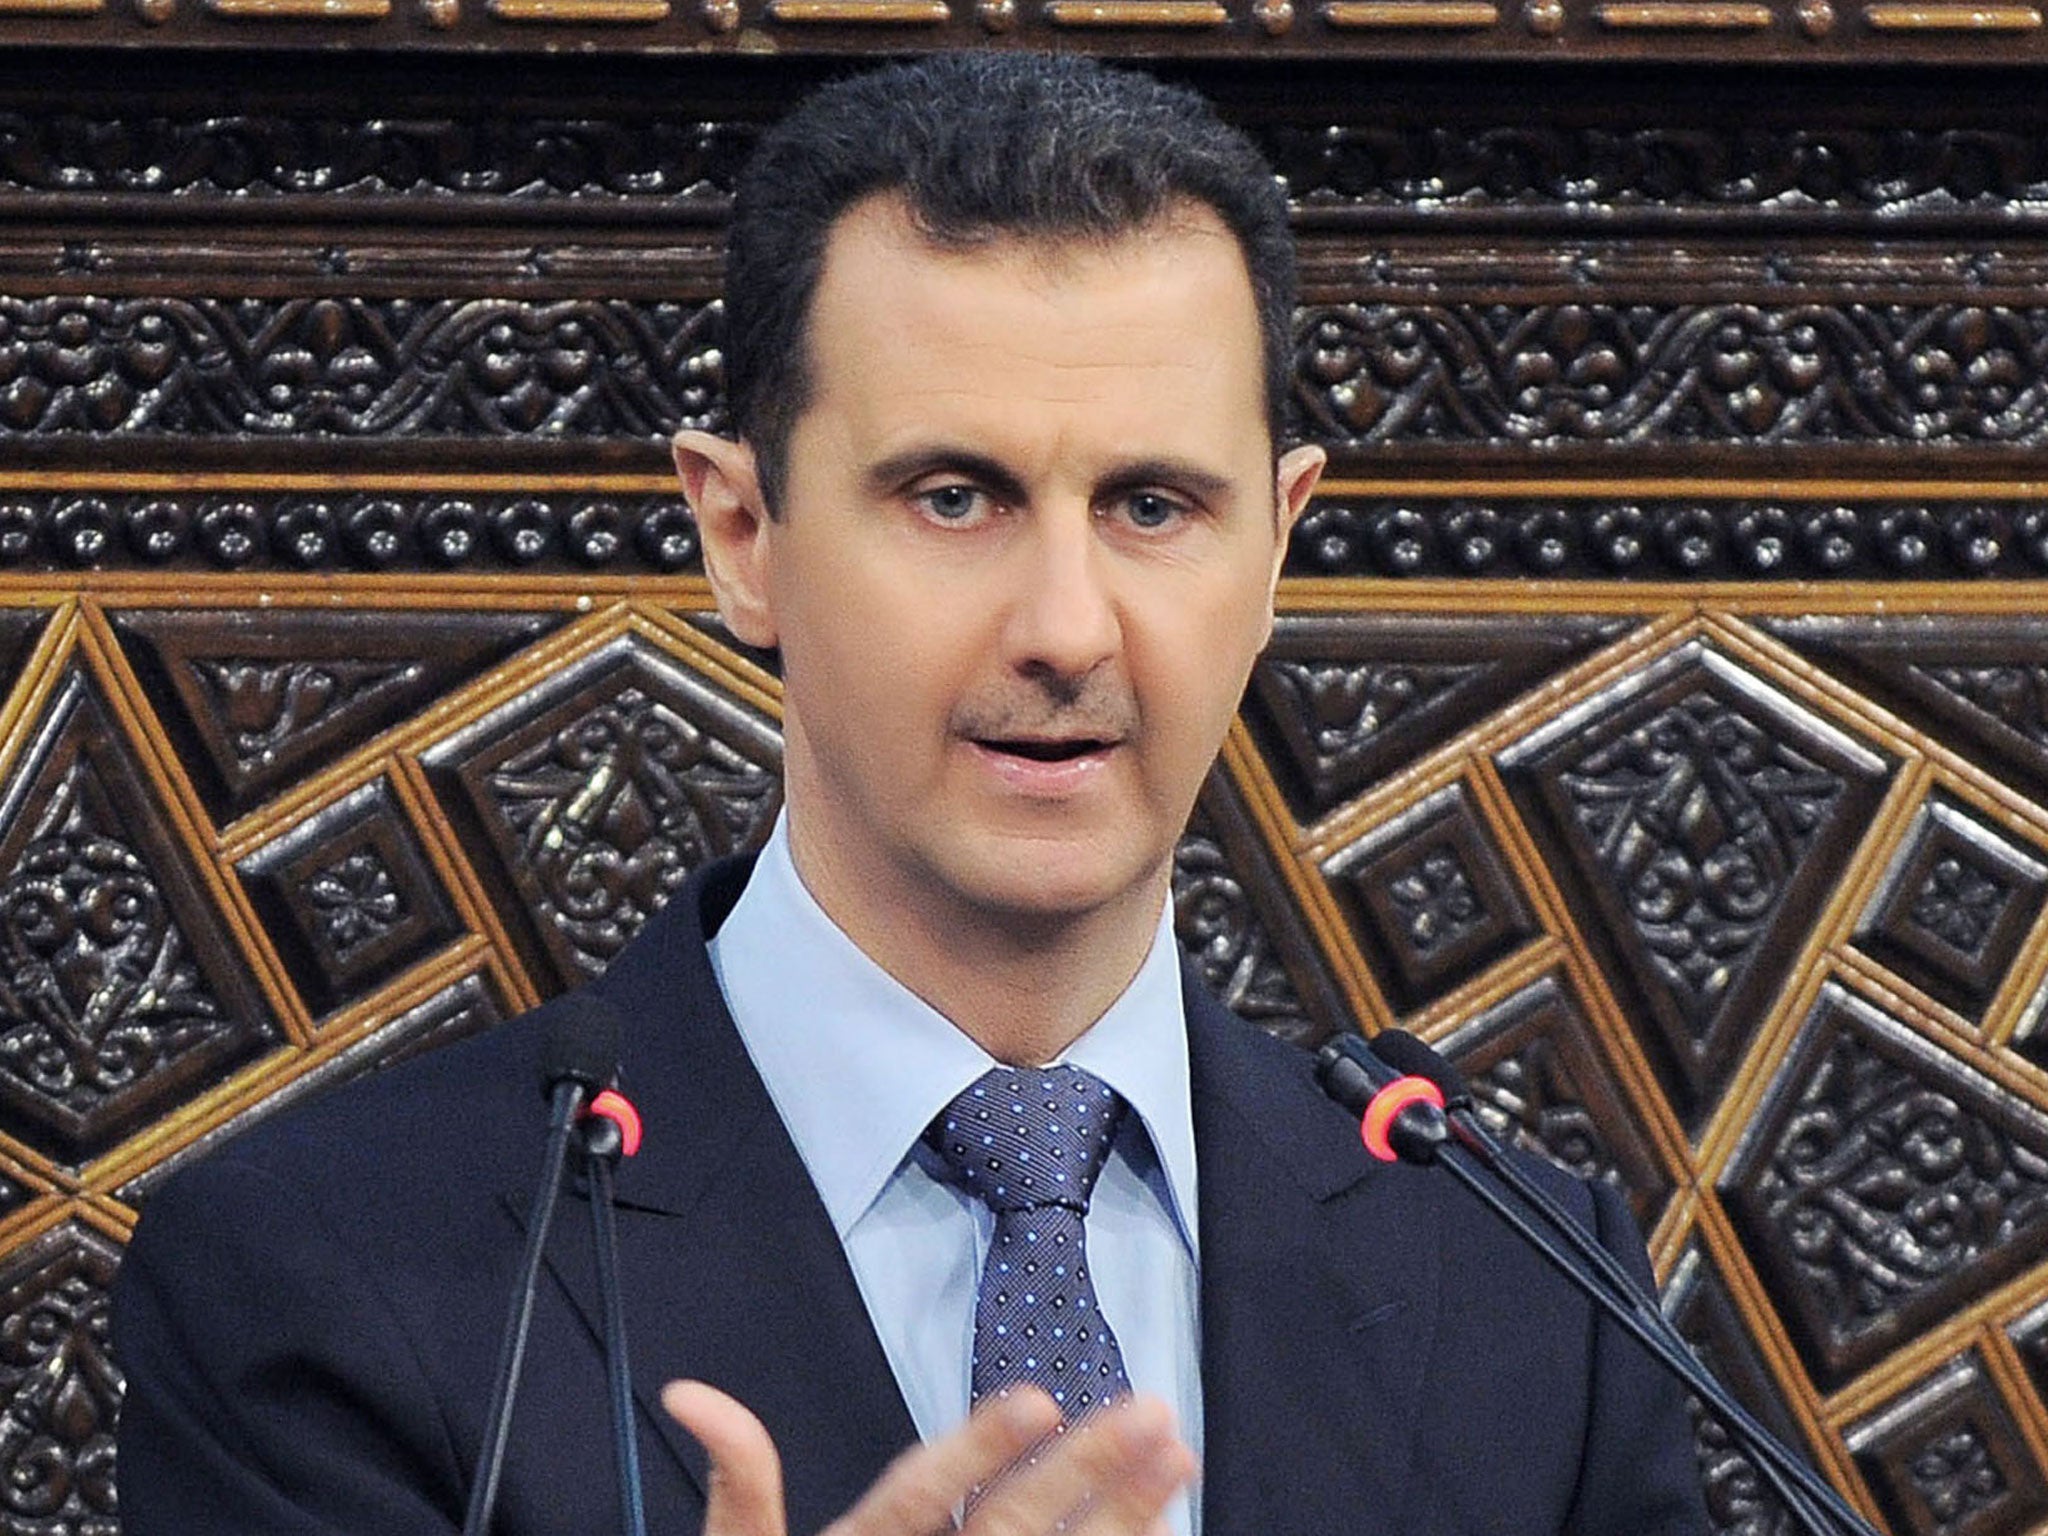 Syria must become a 'resistance nation like Hezbollah' says President Bashar al-Assad